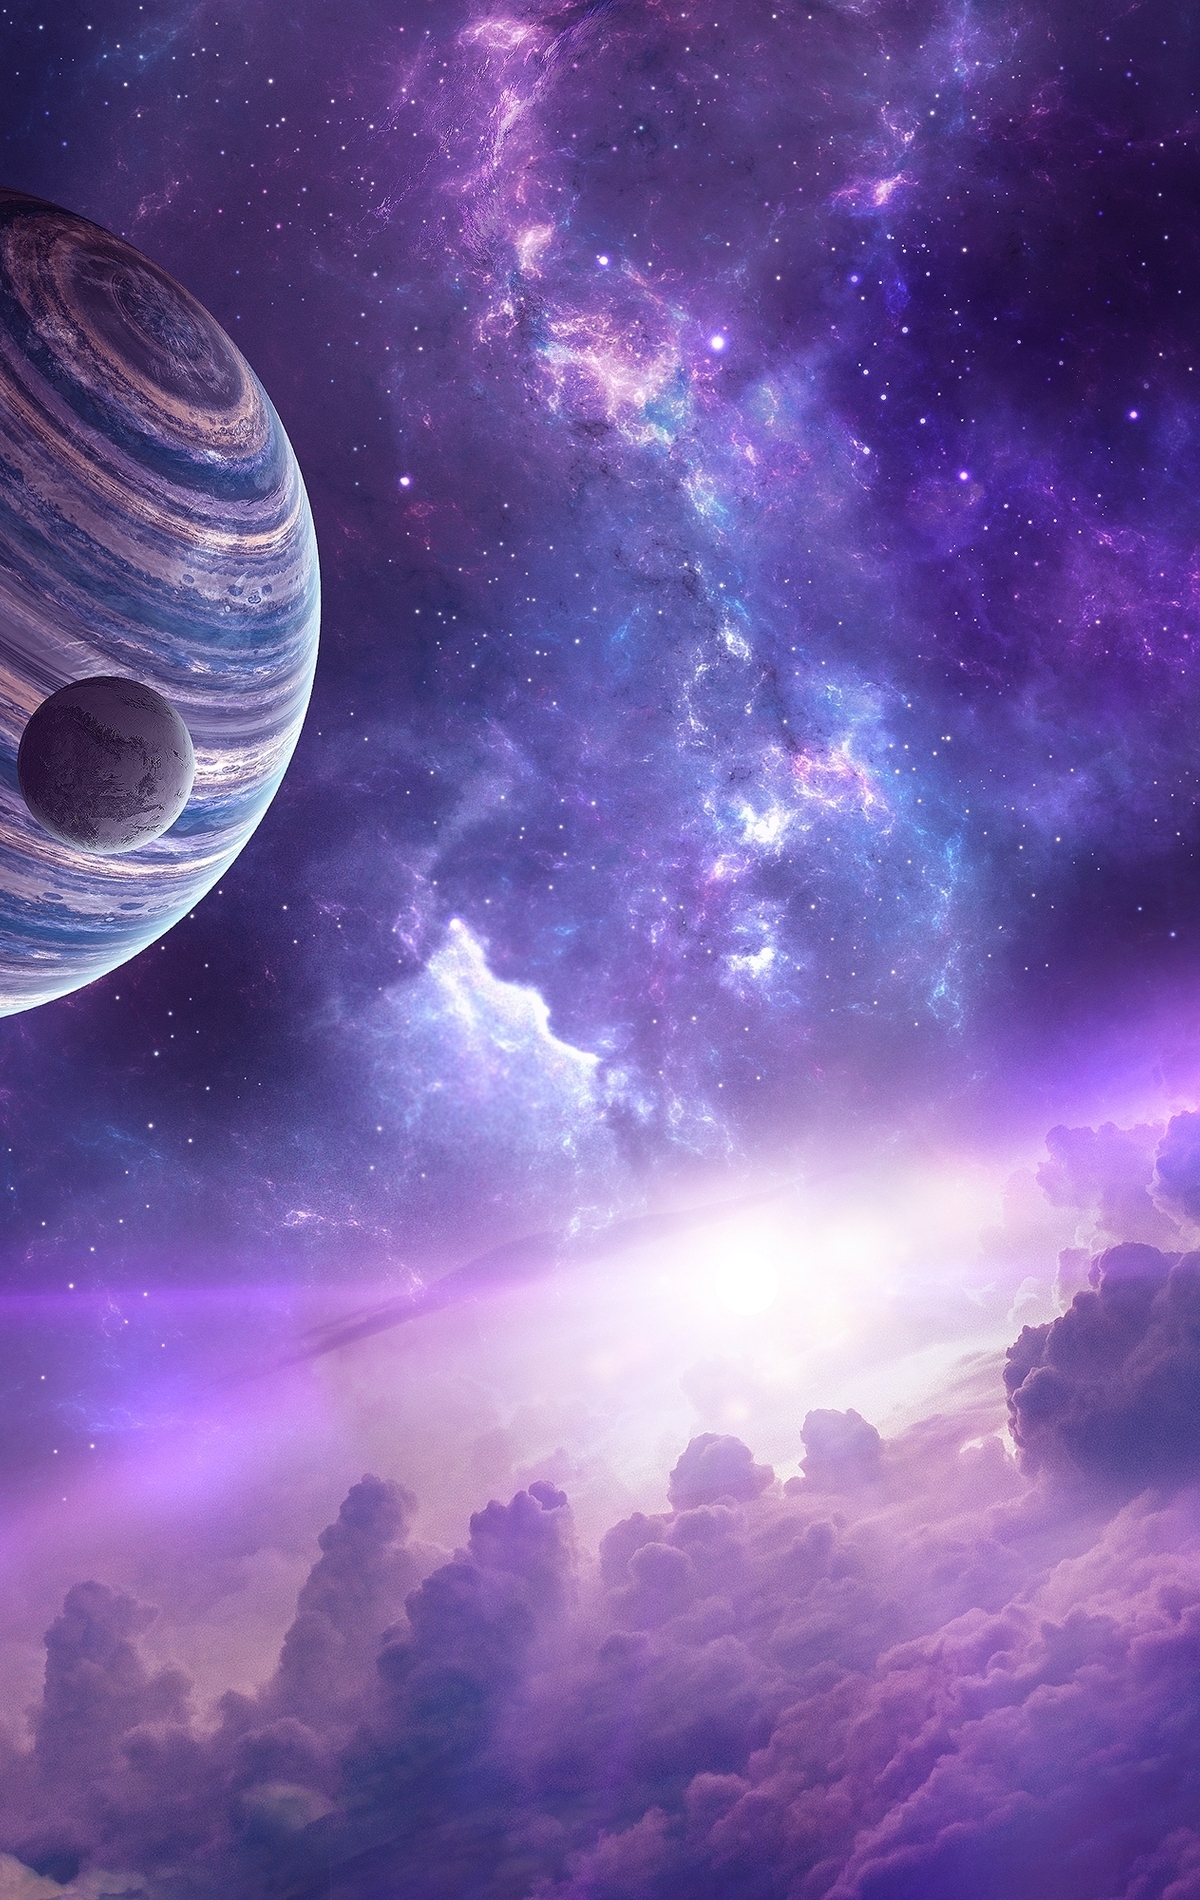 Image: Planets, clouds, space, nebula, stars, light, rays, view